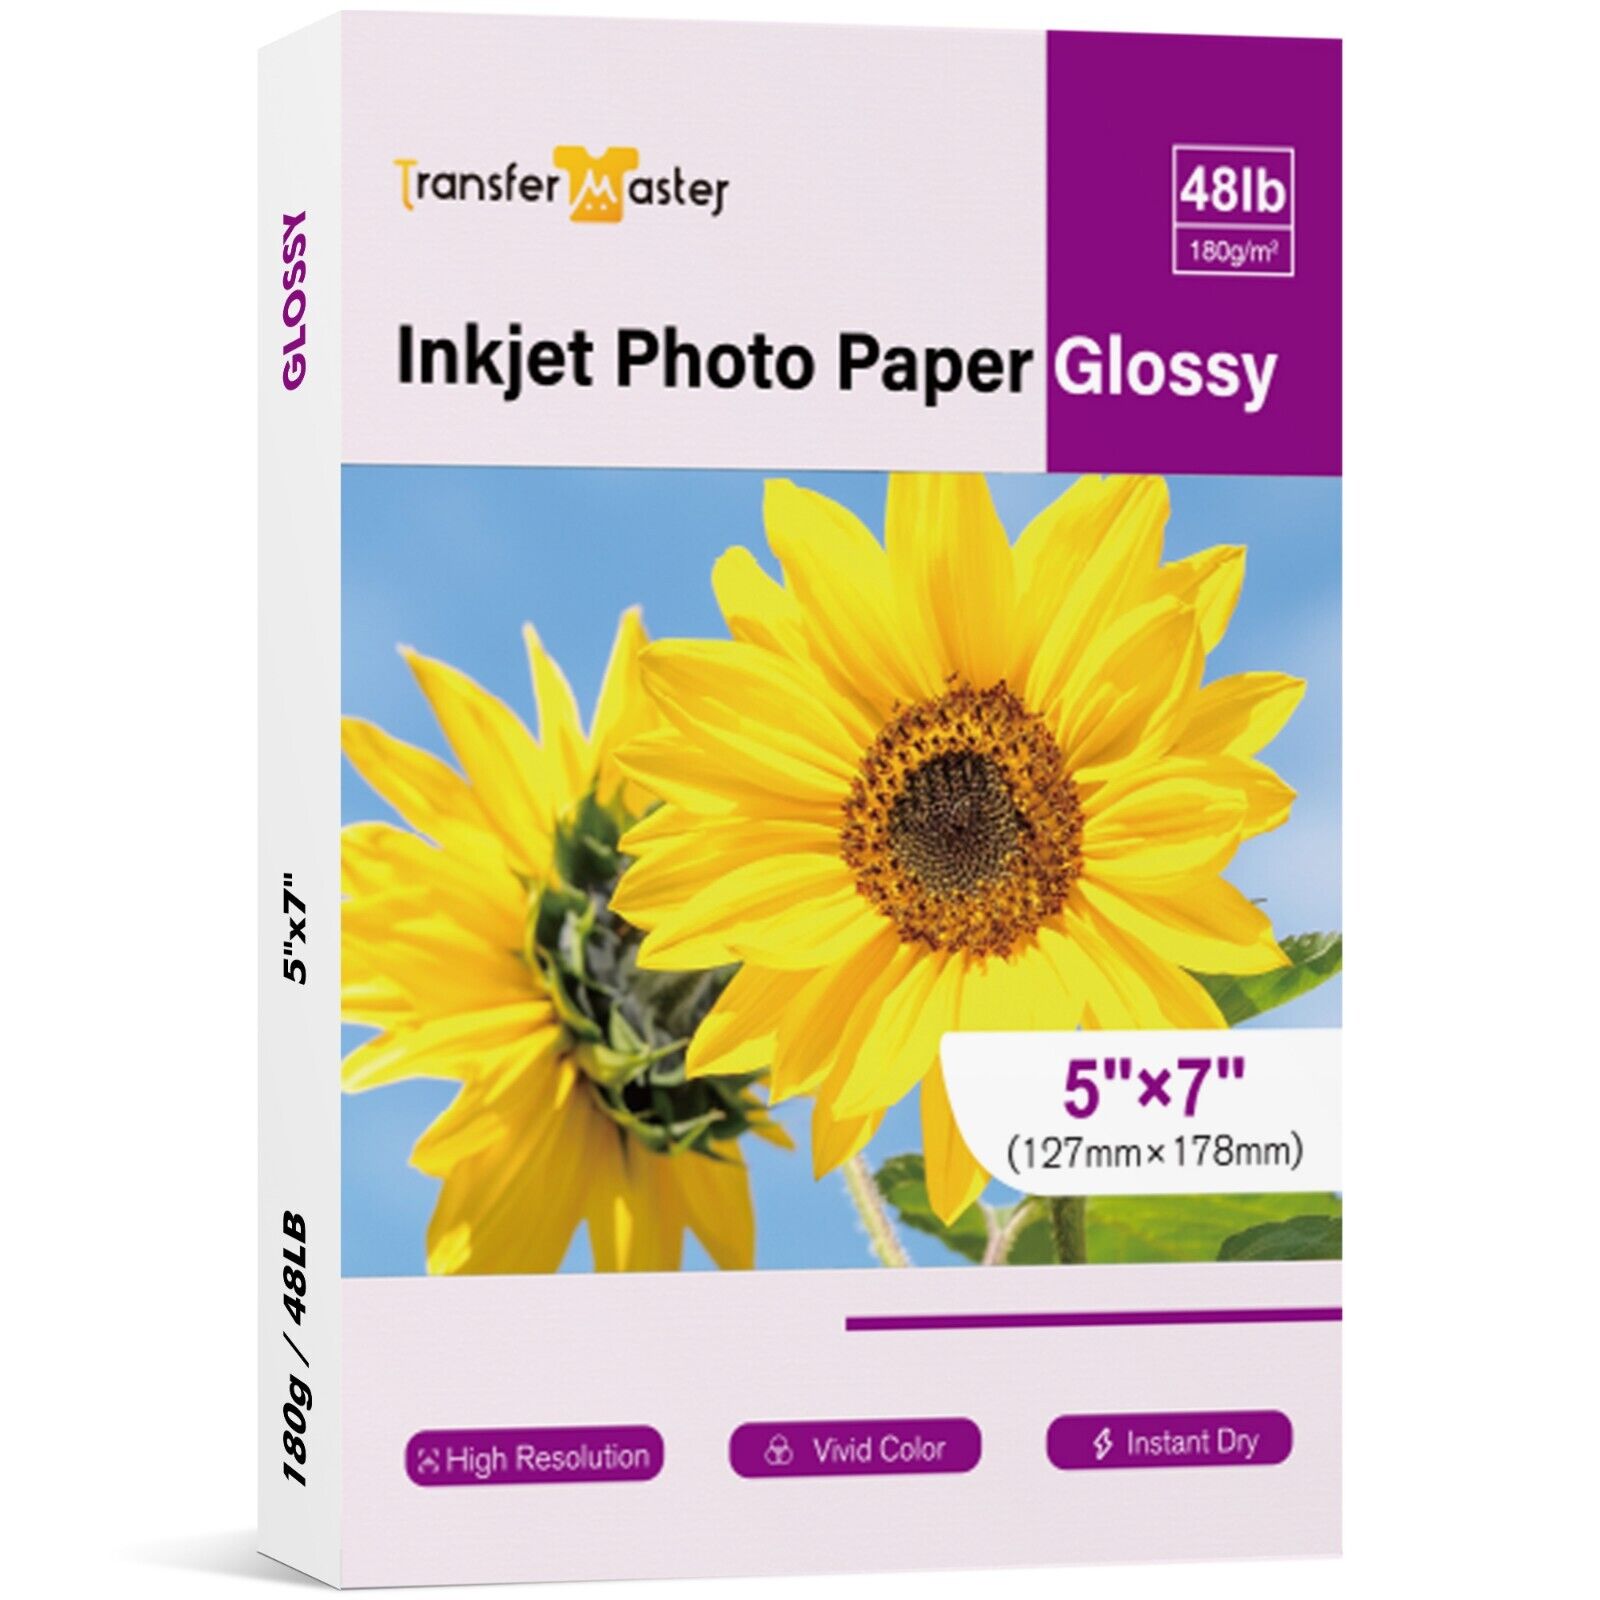 Lot 100-300 Sheet Premium Glossy Photo Paper 5x7 48lb Inkjet Printer Canon Epson